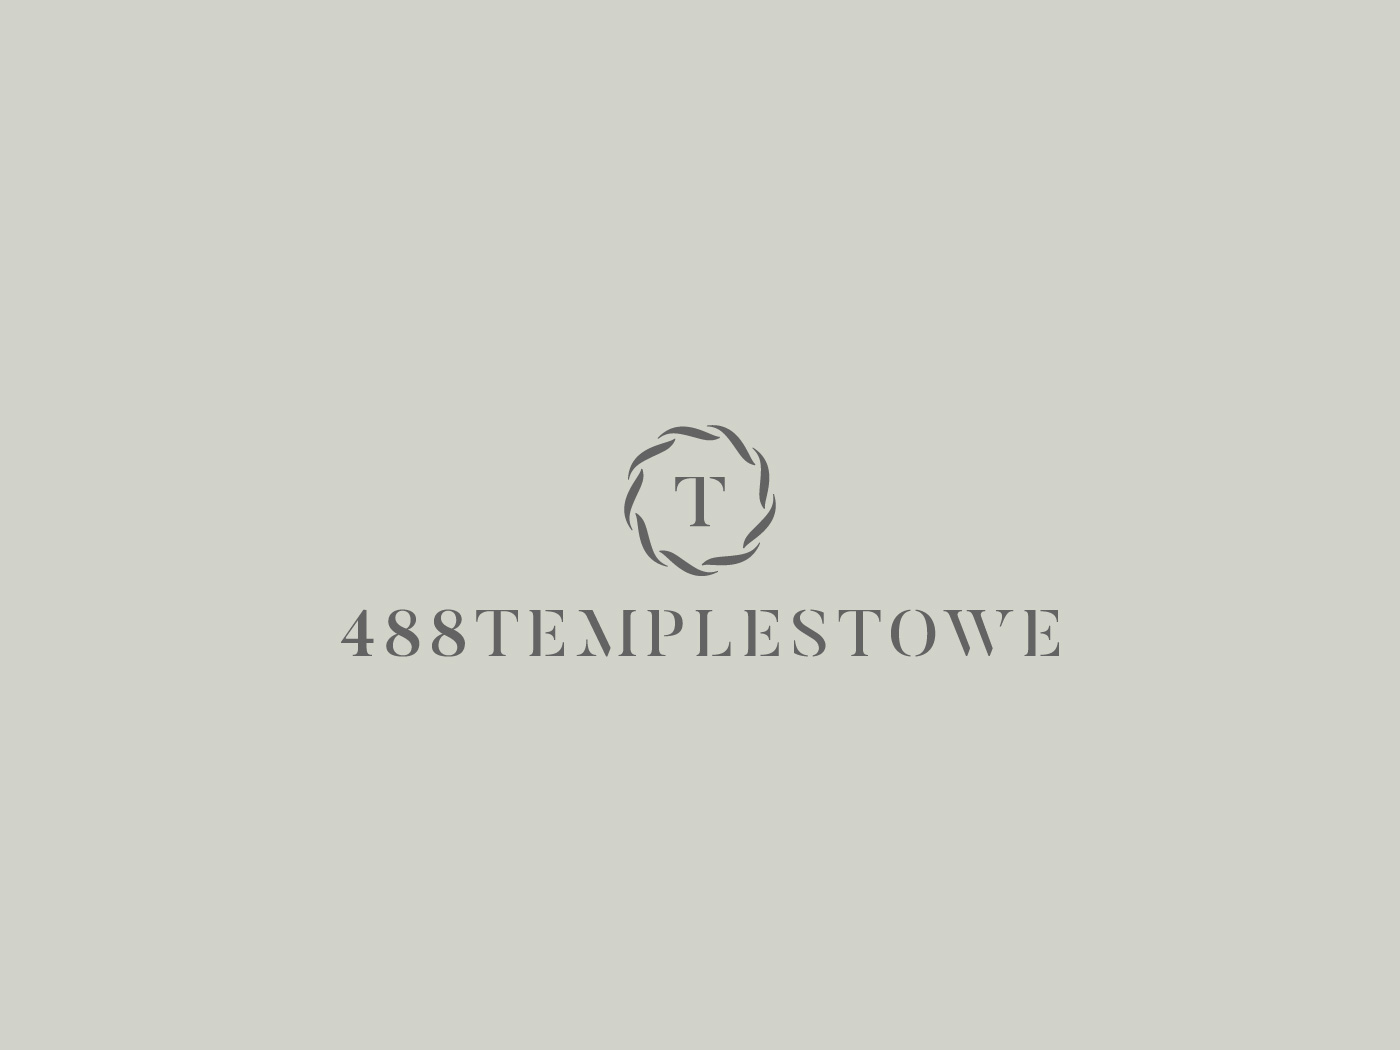 488 templestowe property branding by Z Creative Studio Branding & Graphic Design Melbourne